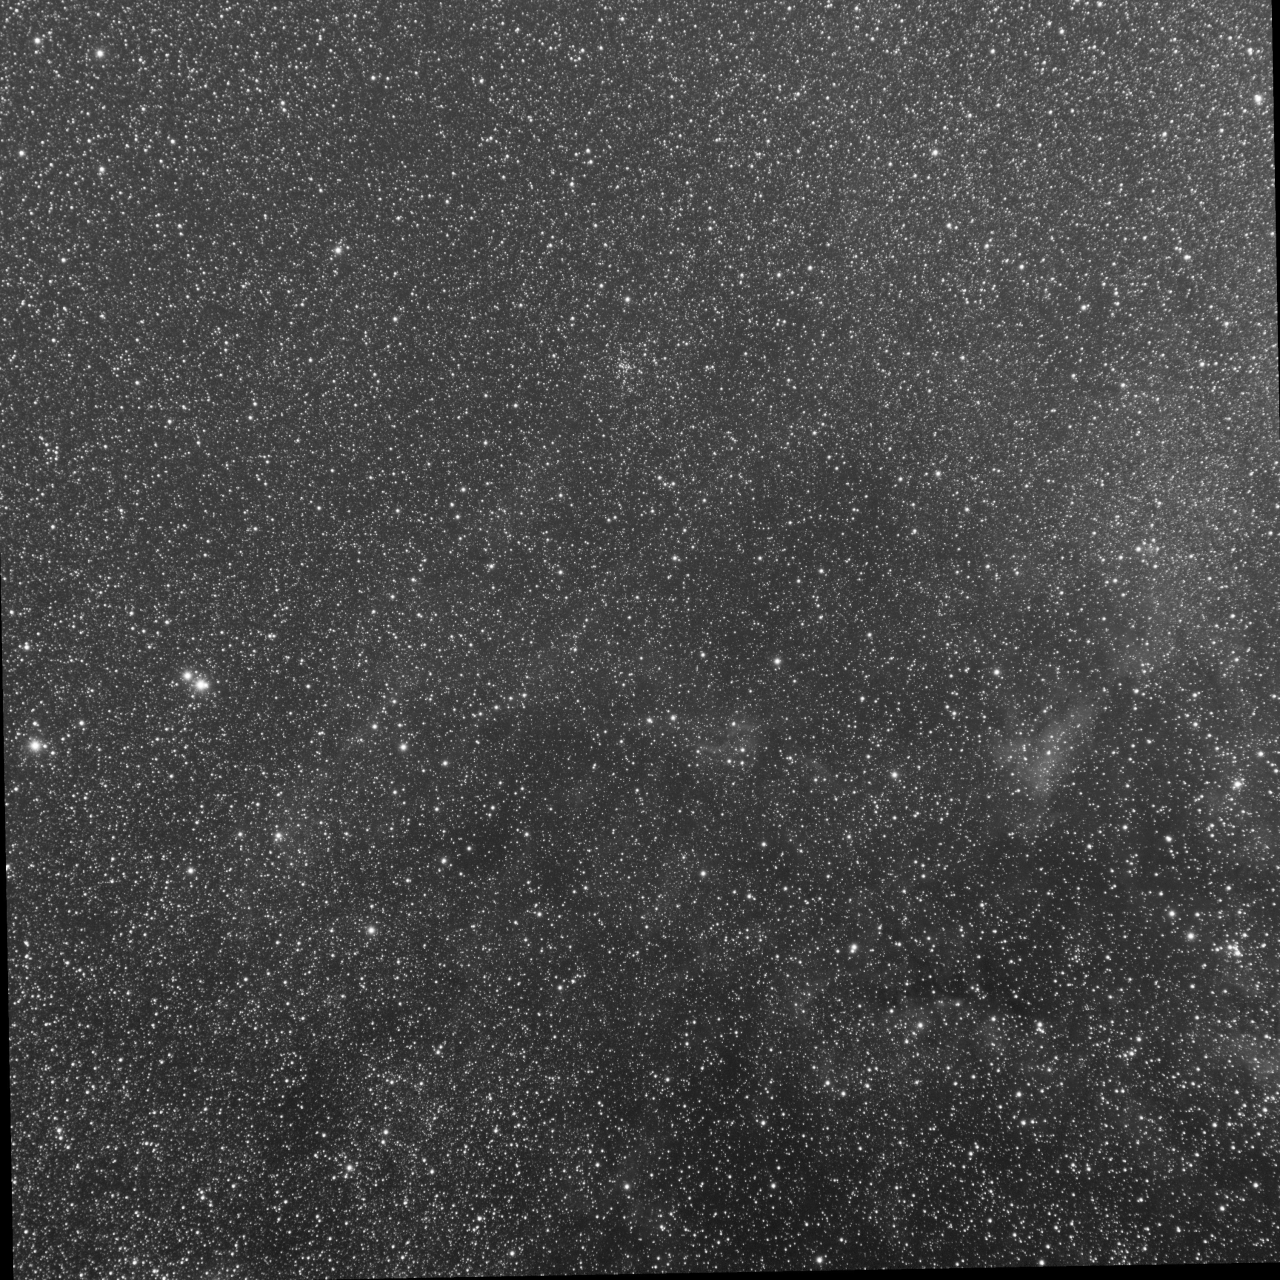 Cygnus near DWB111 - L